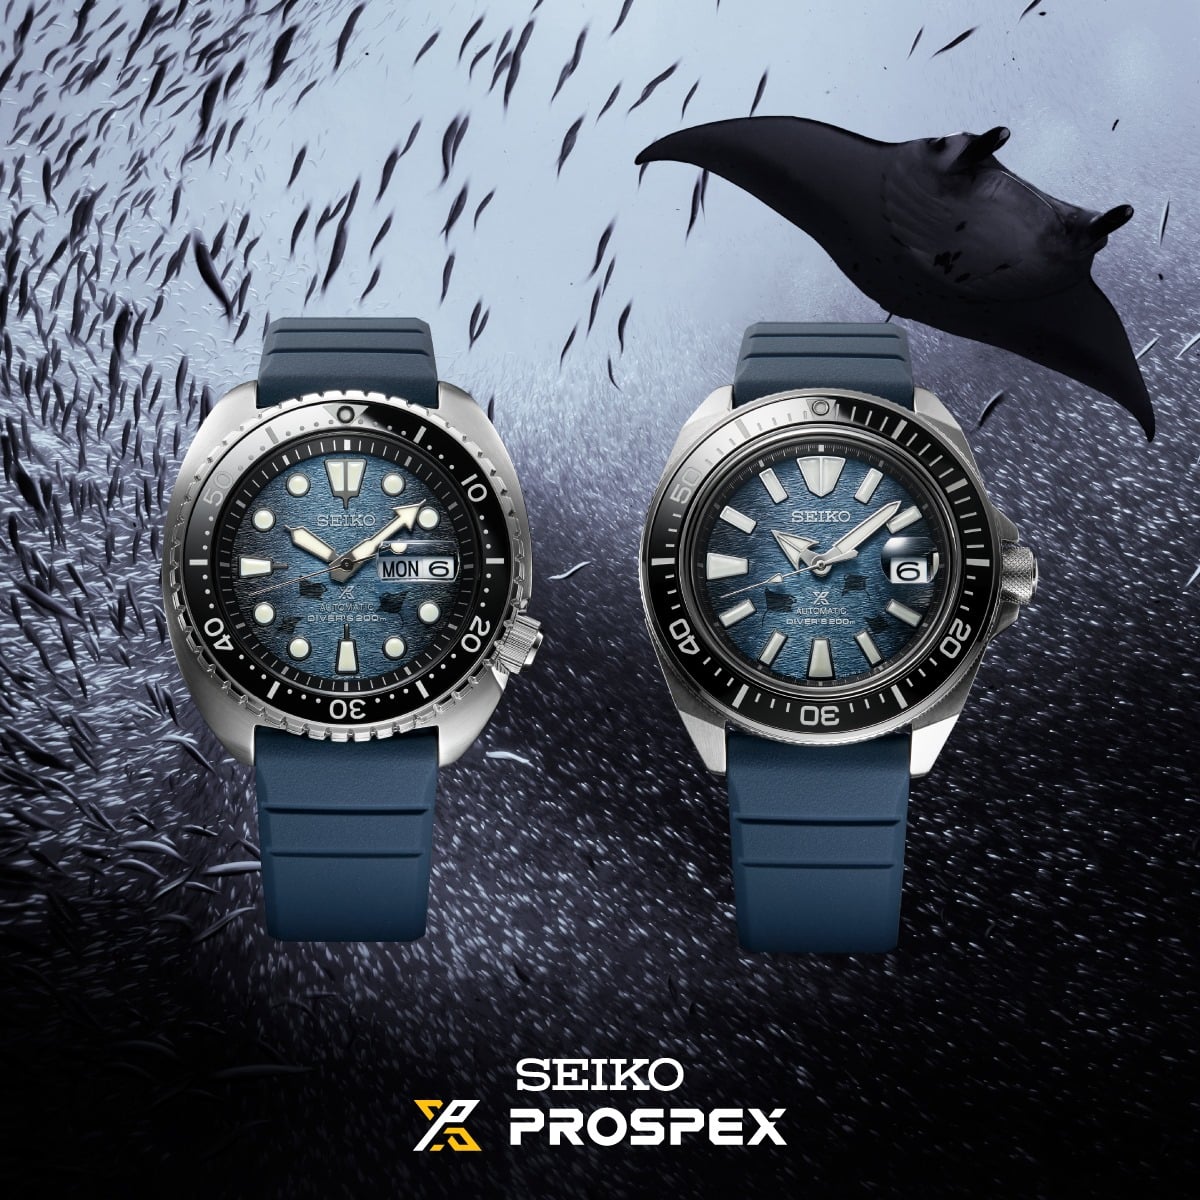 SRPF77K1 นาฬิกา Seiko King Turtle Dark Manta Ray Special ใหม่แกะกล่อง  พร้อมรับประกันศูนย์ จัดส่งฟรีทั่วไทย